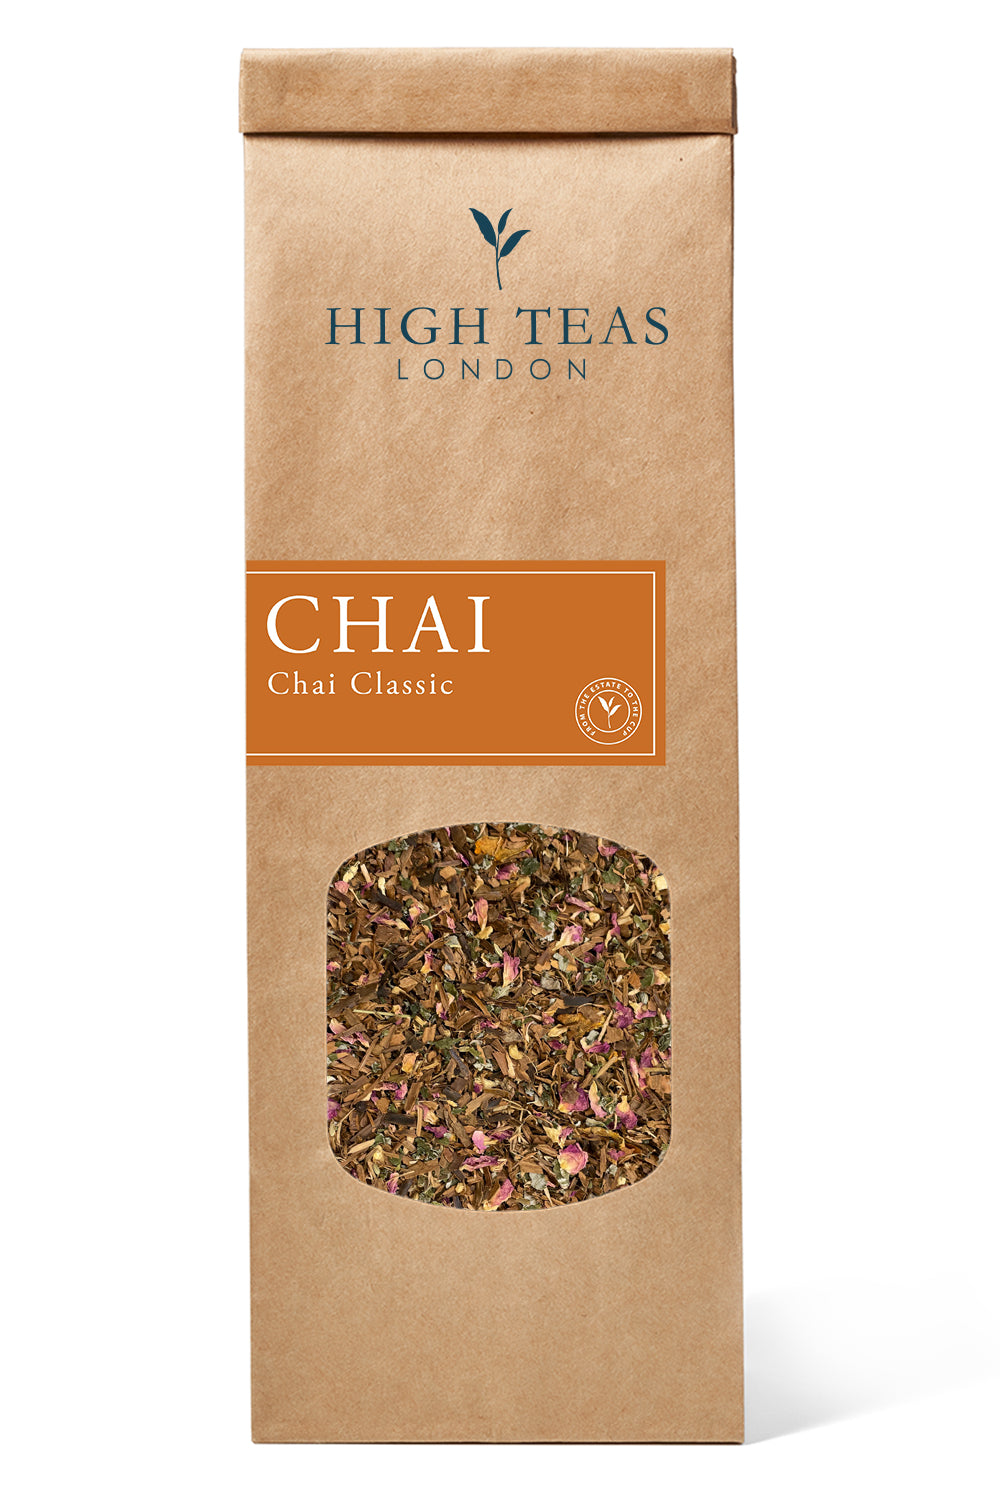 Chai Classic-50g-Loose Leaf Tea-High Teas